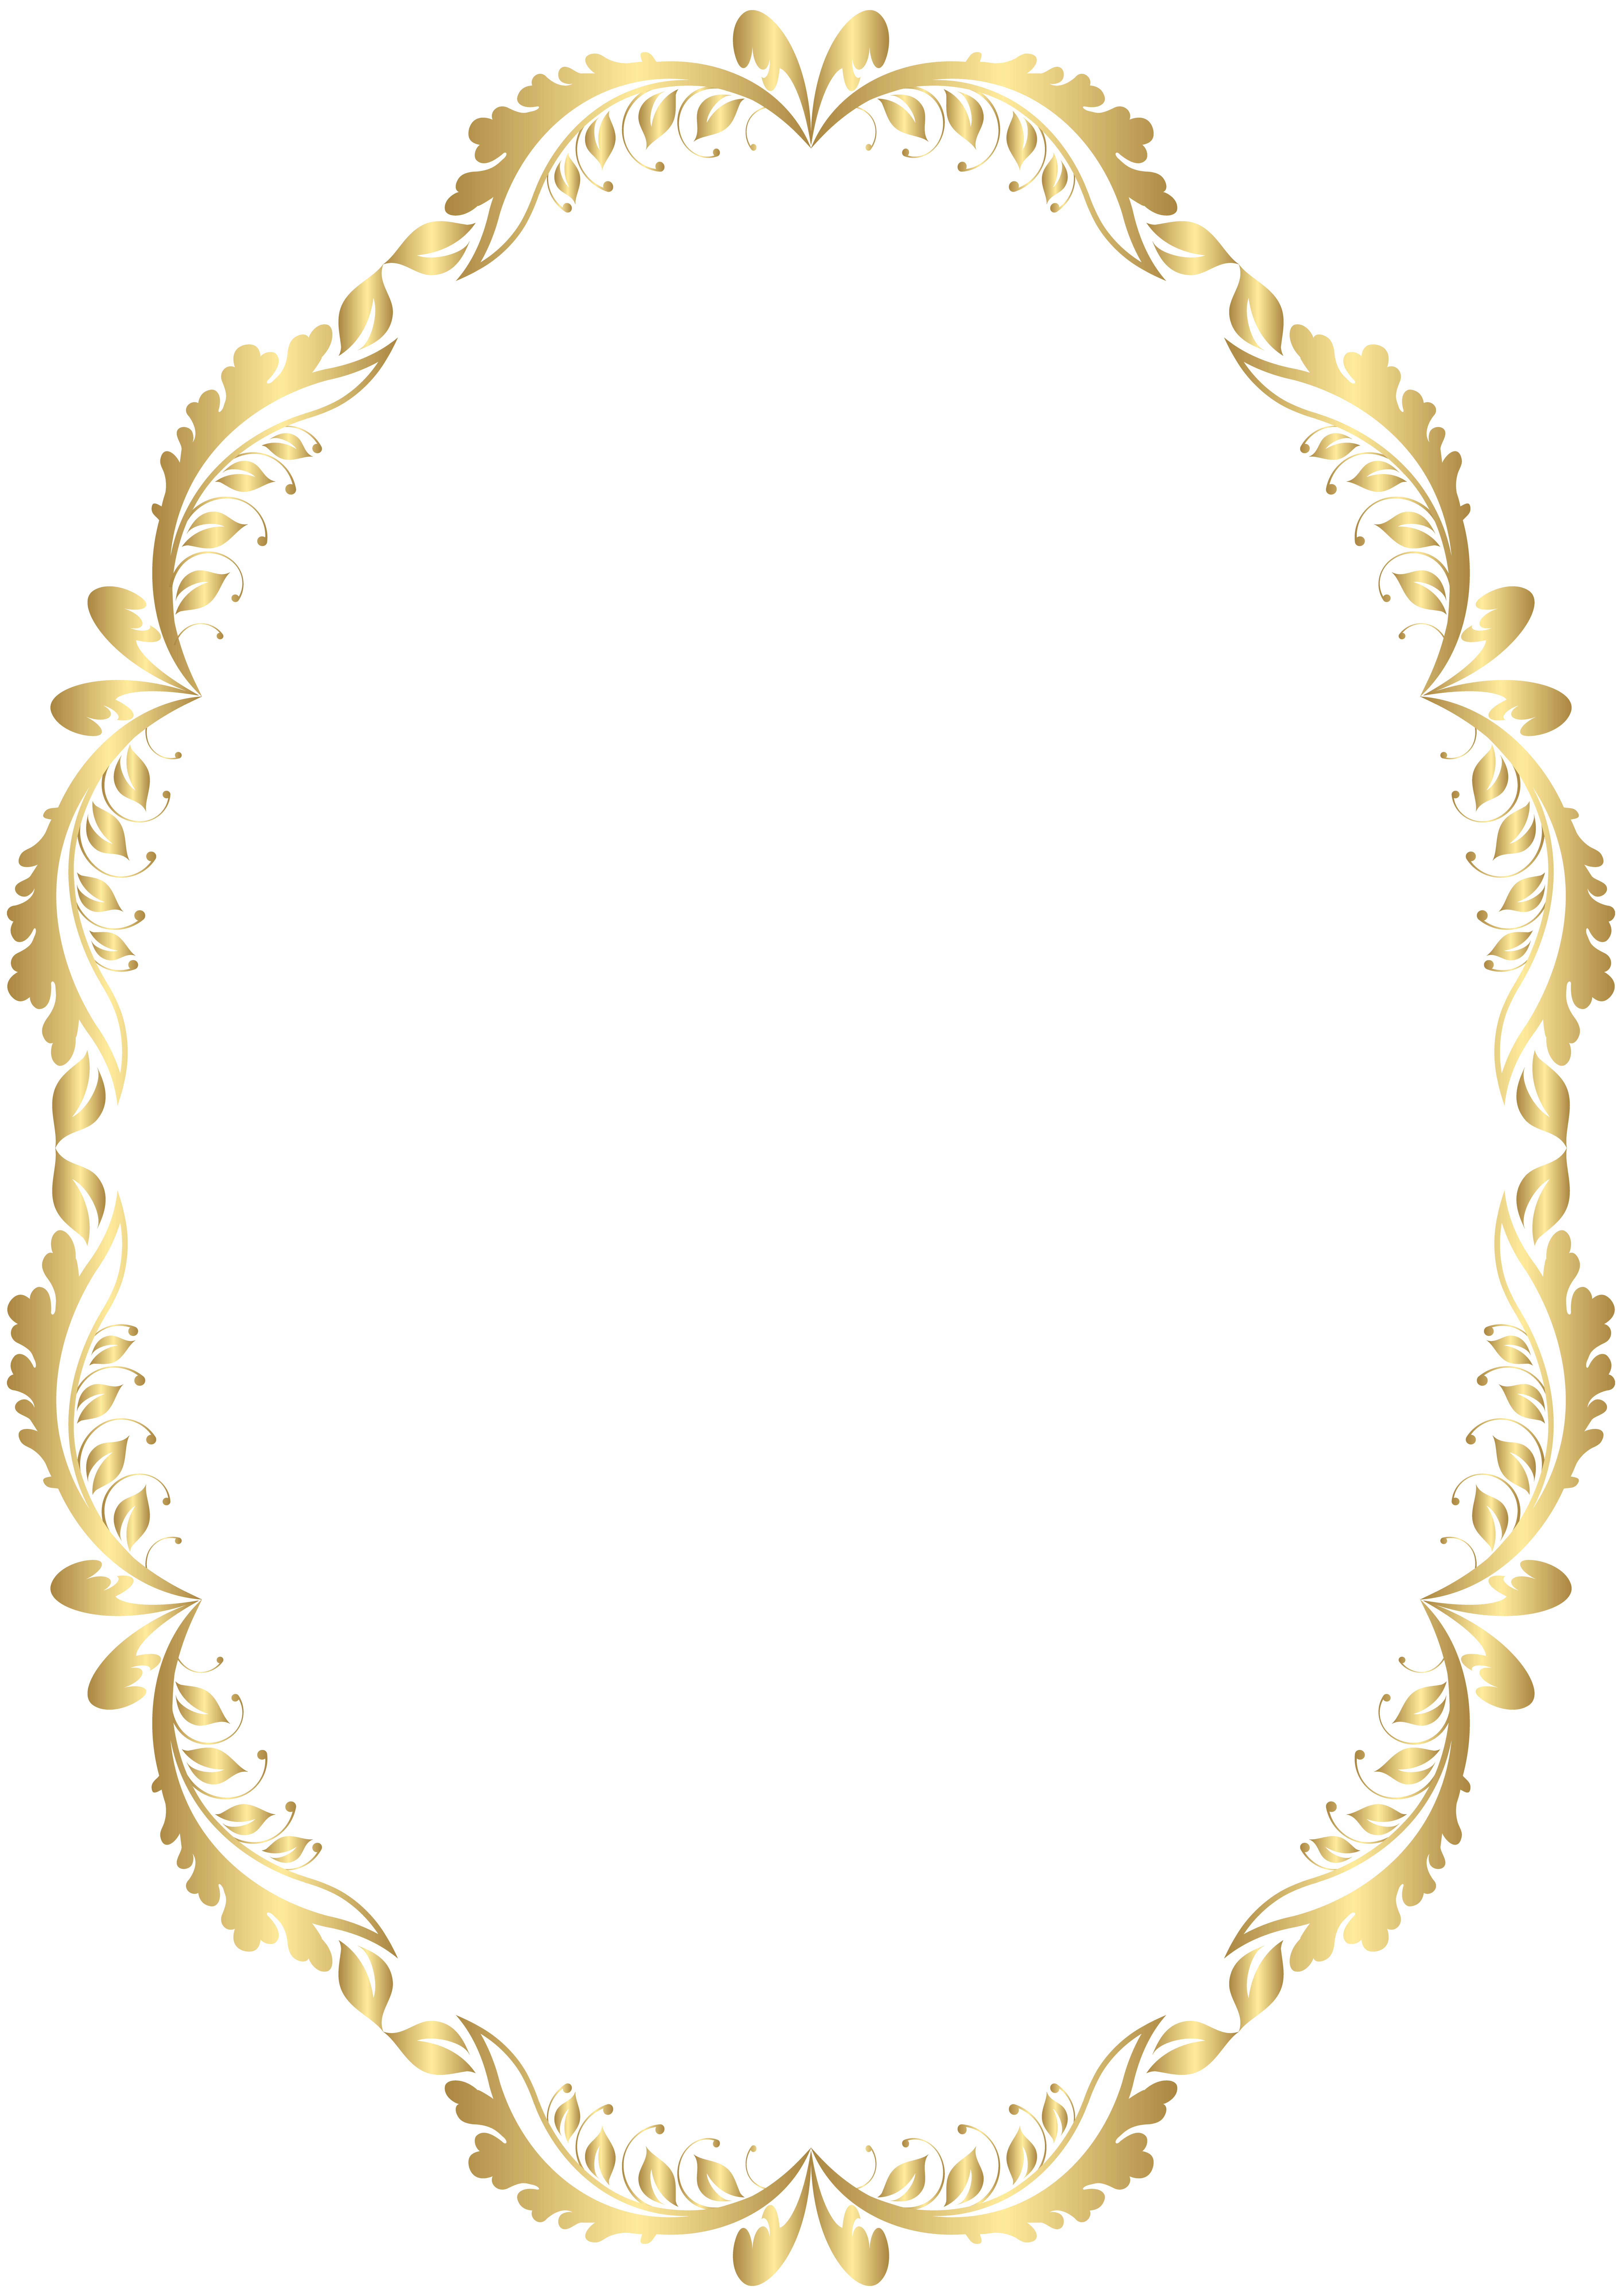 Clipboard clipart border. Golden oval transparent png